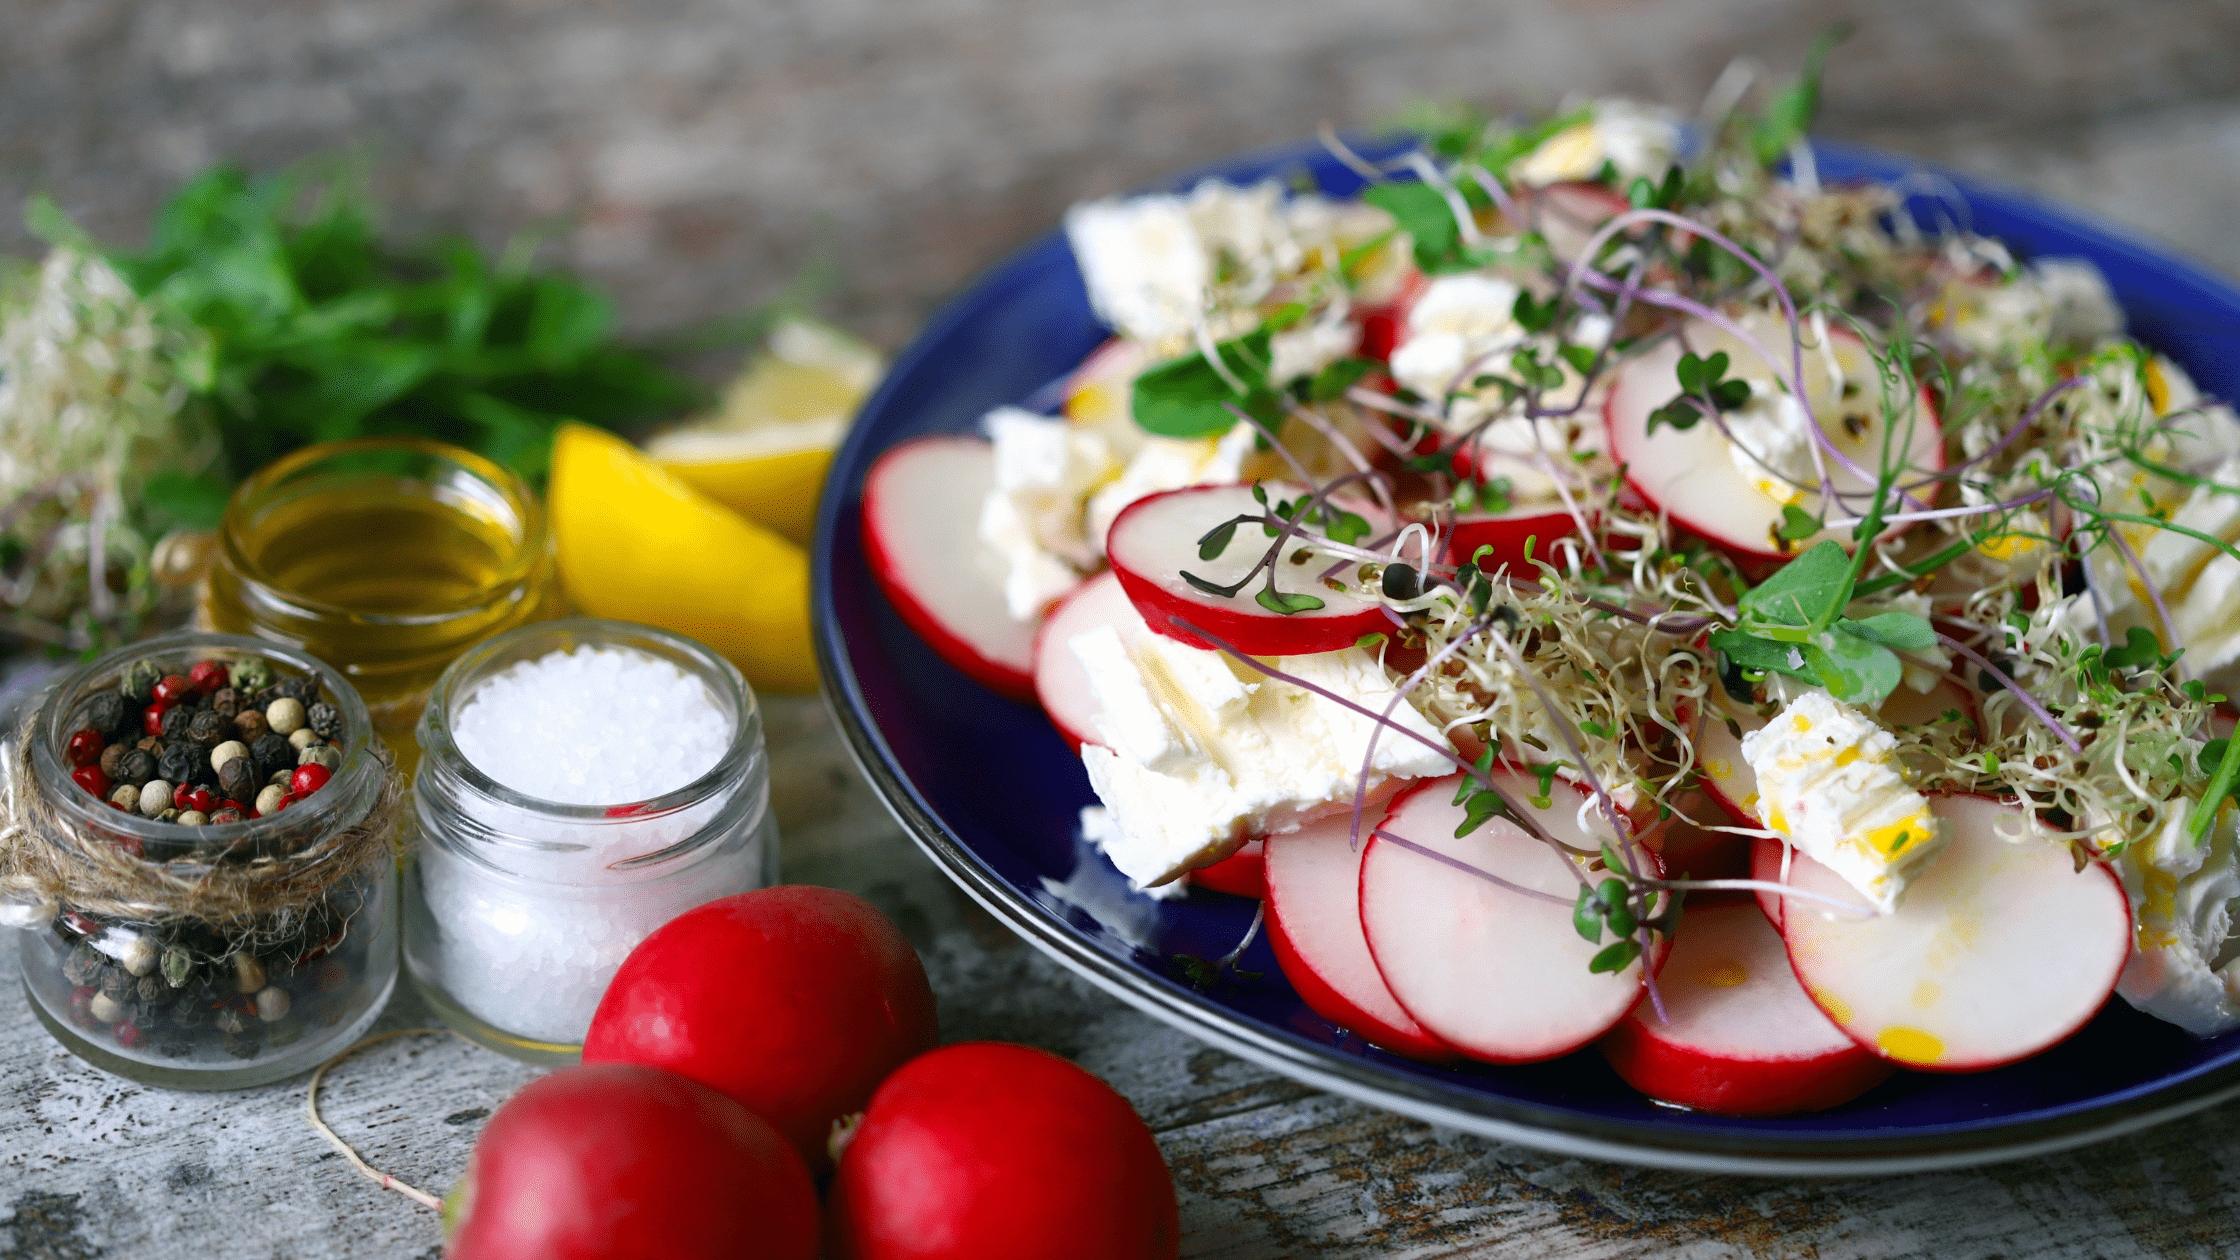 Big Salad with Rainbow Mix. Healthy holiday recipe.